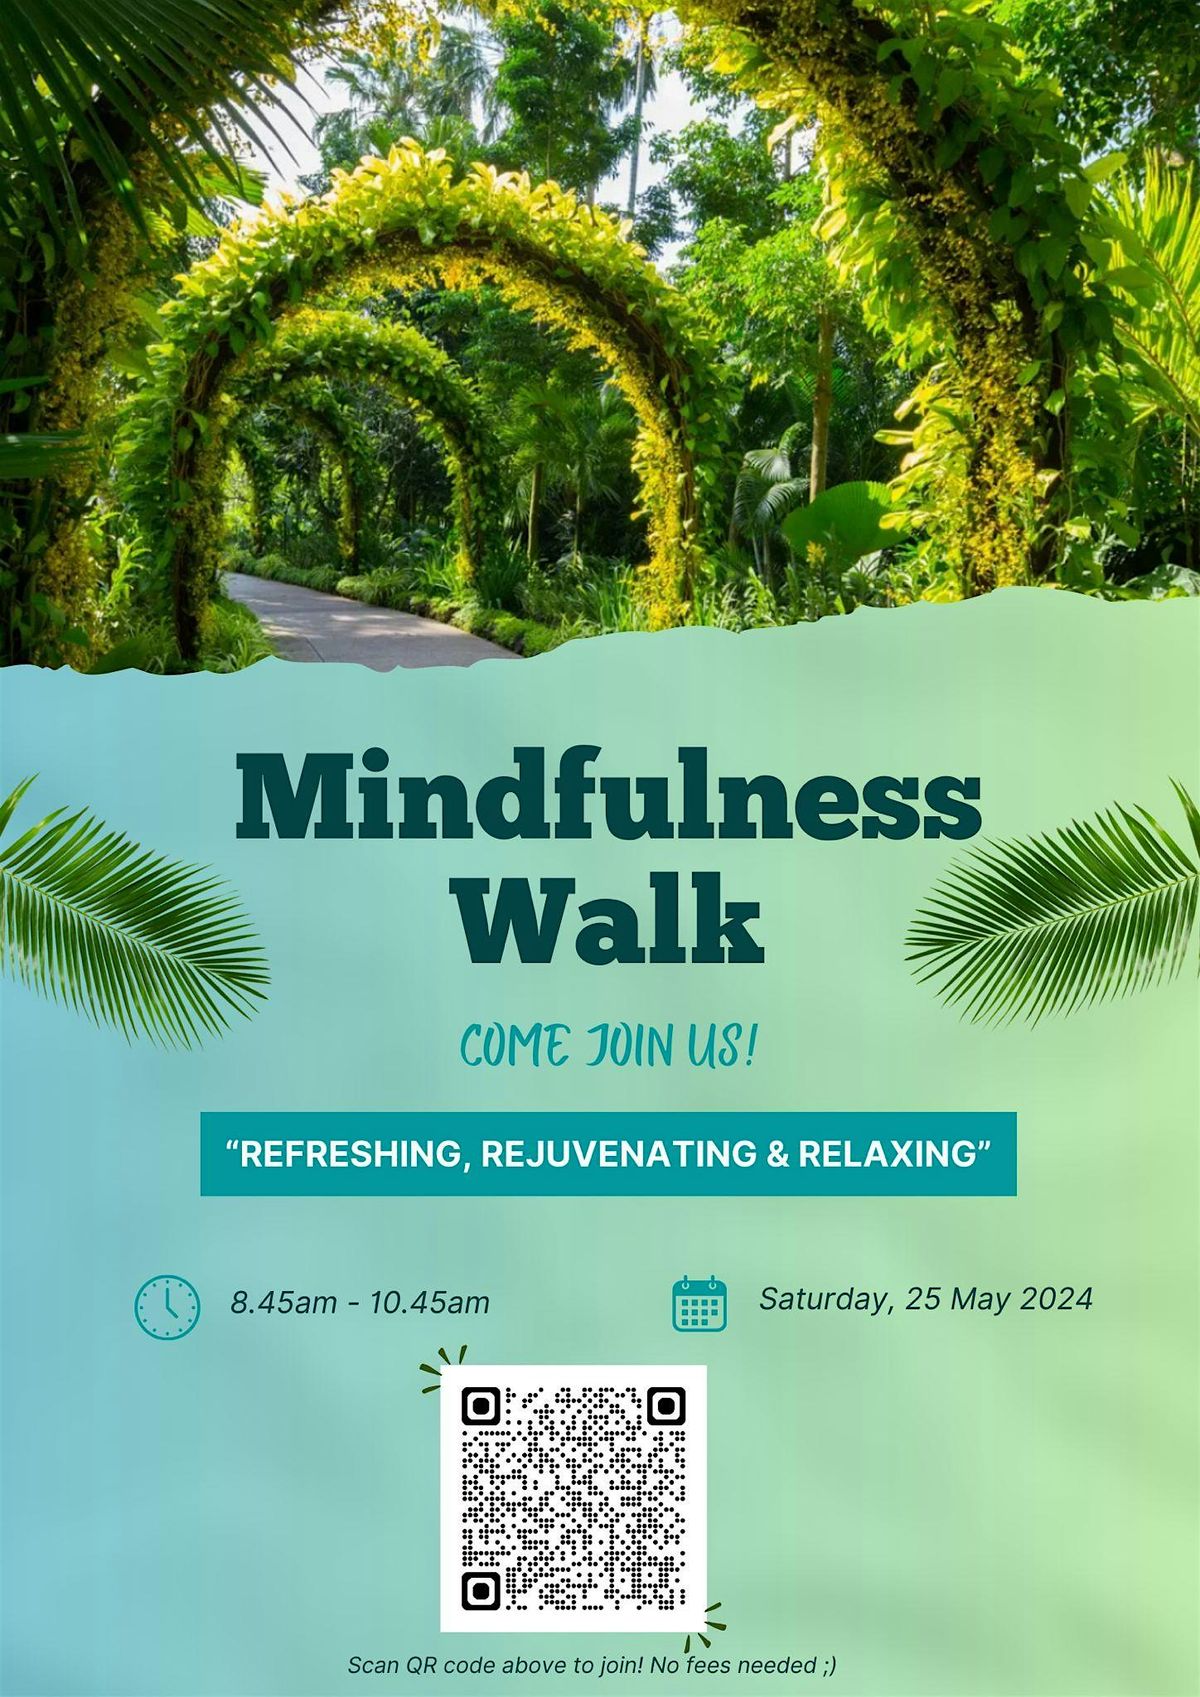 Mindfulness Walk at Botanical Garden